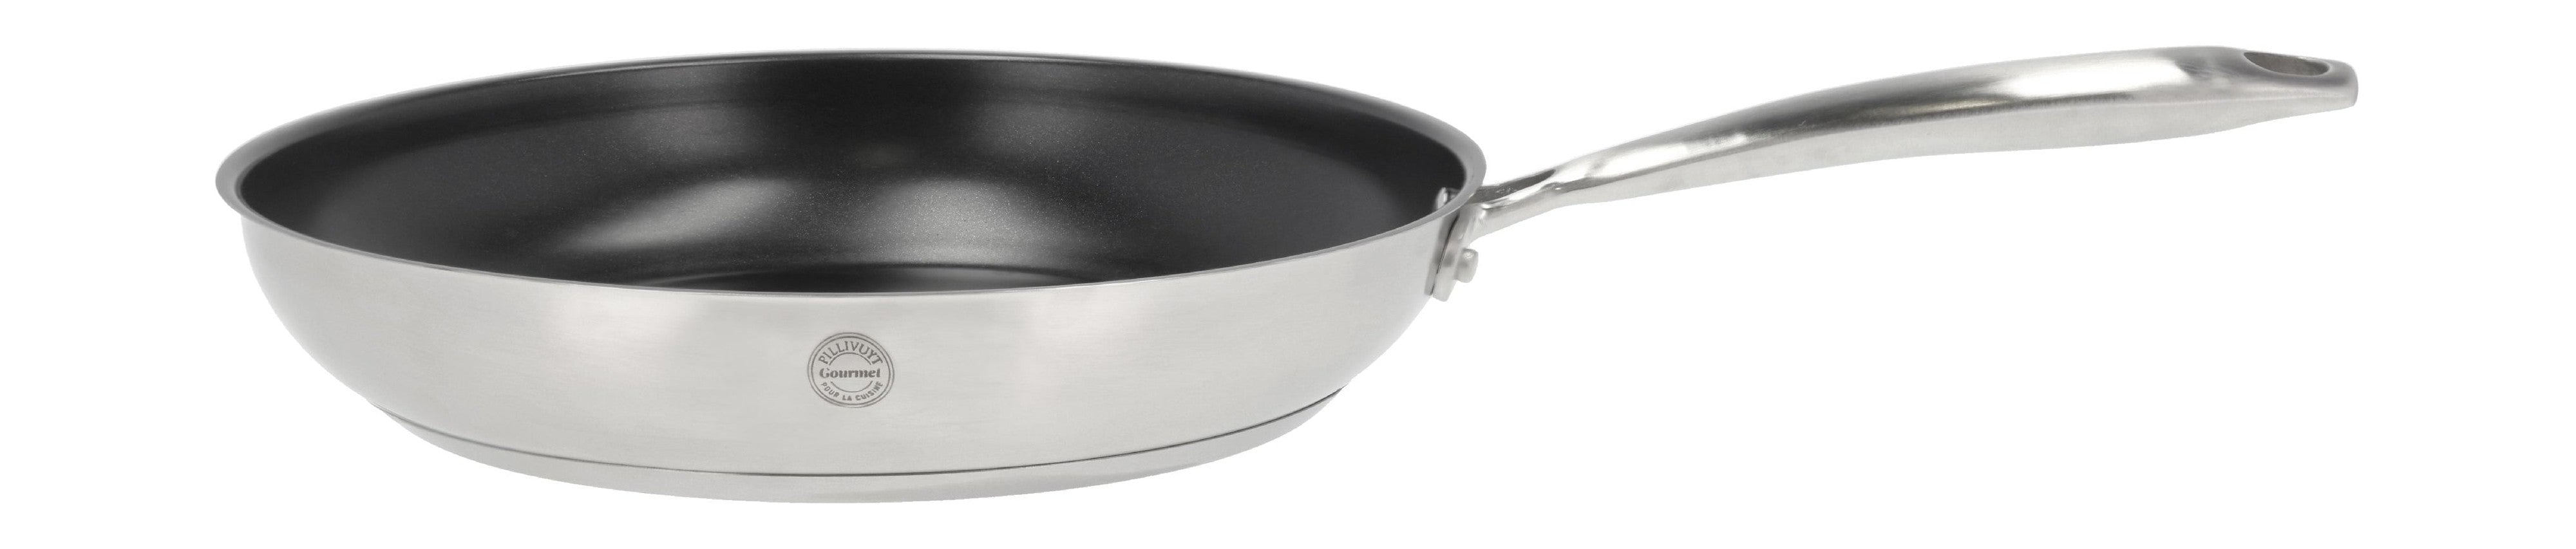 Pillivuyt Gourmet Roya Frying Pan Ceramic Non Stick, ø28 Cm